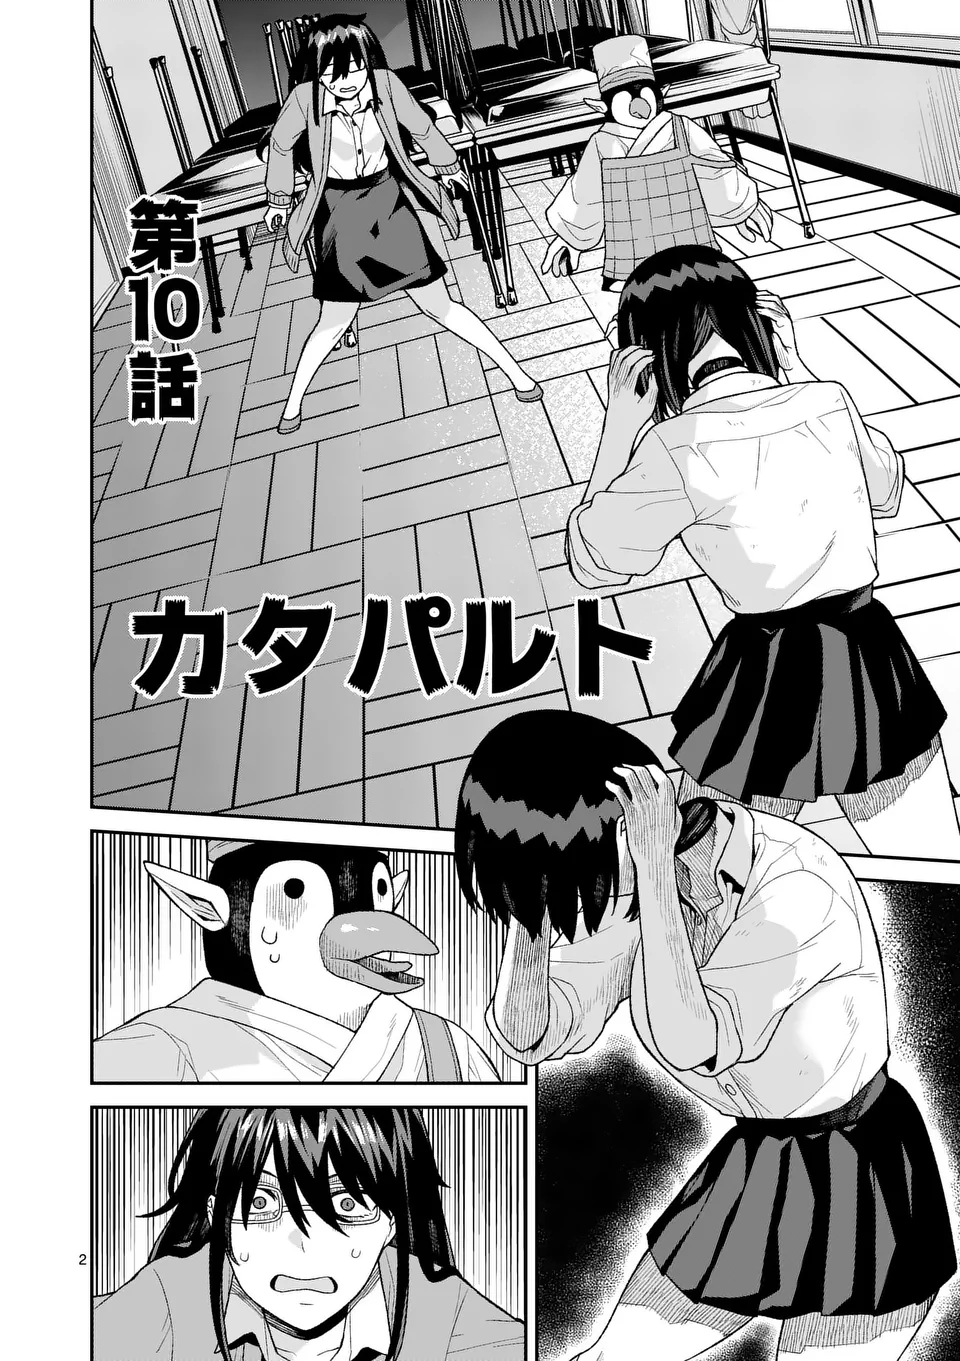 Bakemono Goroshi no Psycholily - Chapter 10 - Page 2